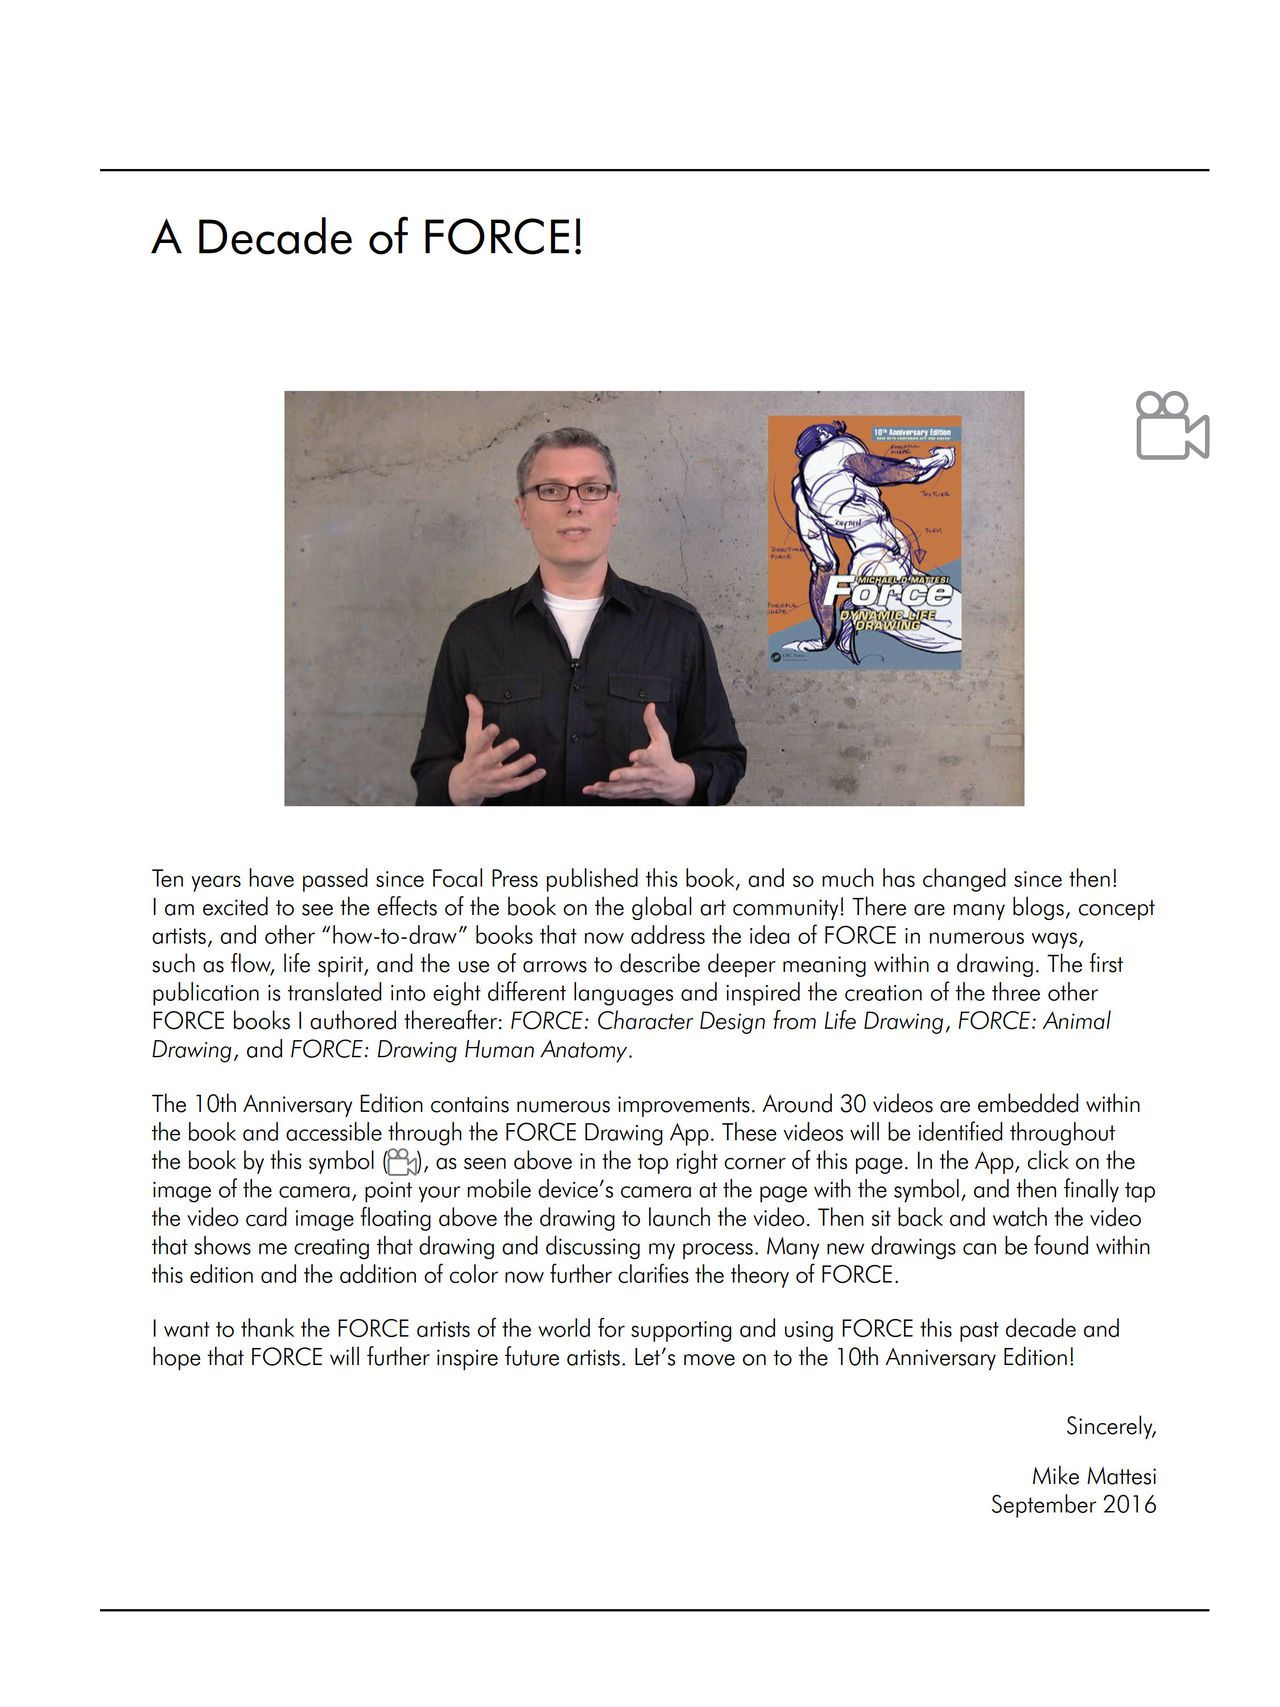 FORCE Dynamic Life Drawing 10th Anniversary Edition - Michael D. Mattesi [Digital] 10